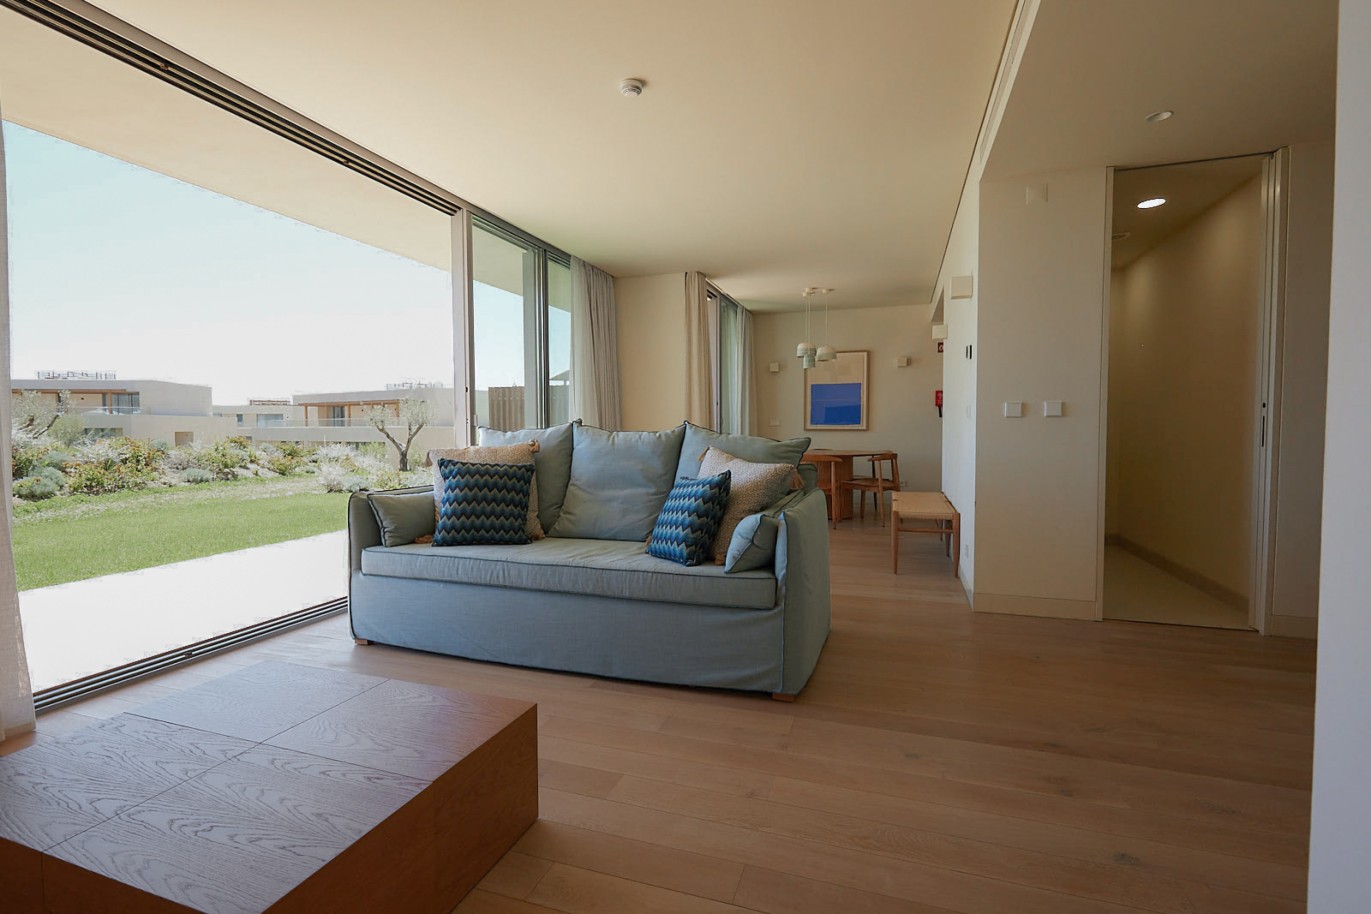 2 bedroom apartment in resort, for sale in Porches, Algarve_229225